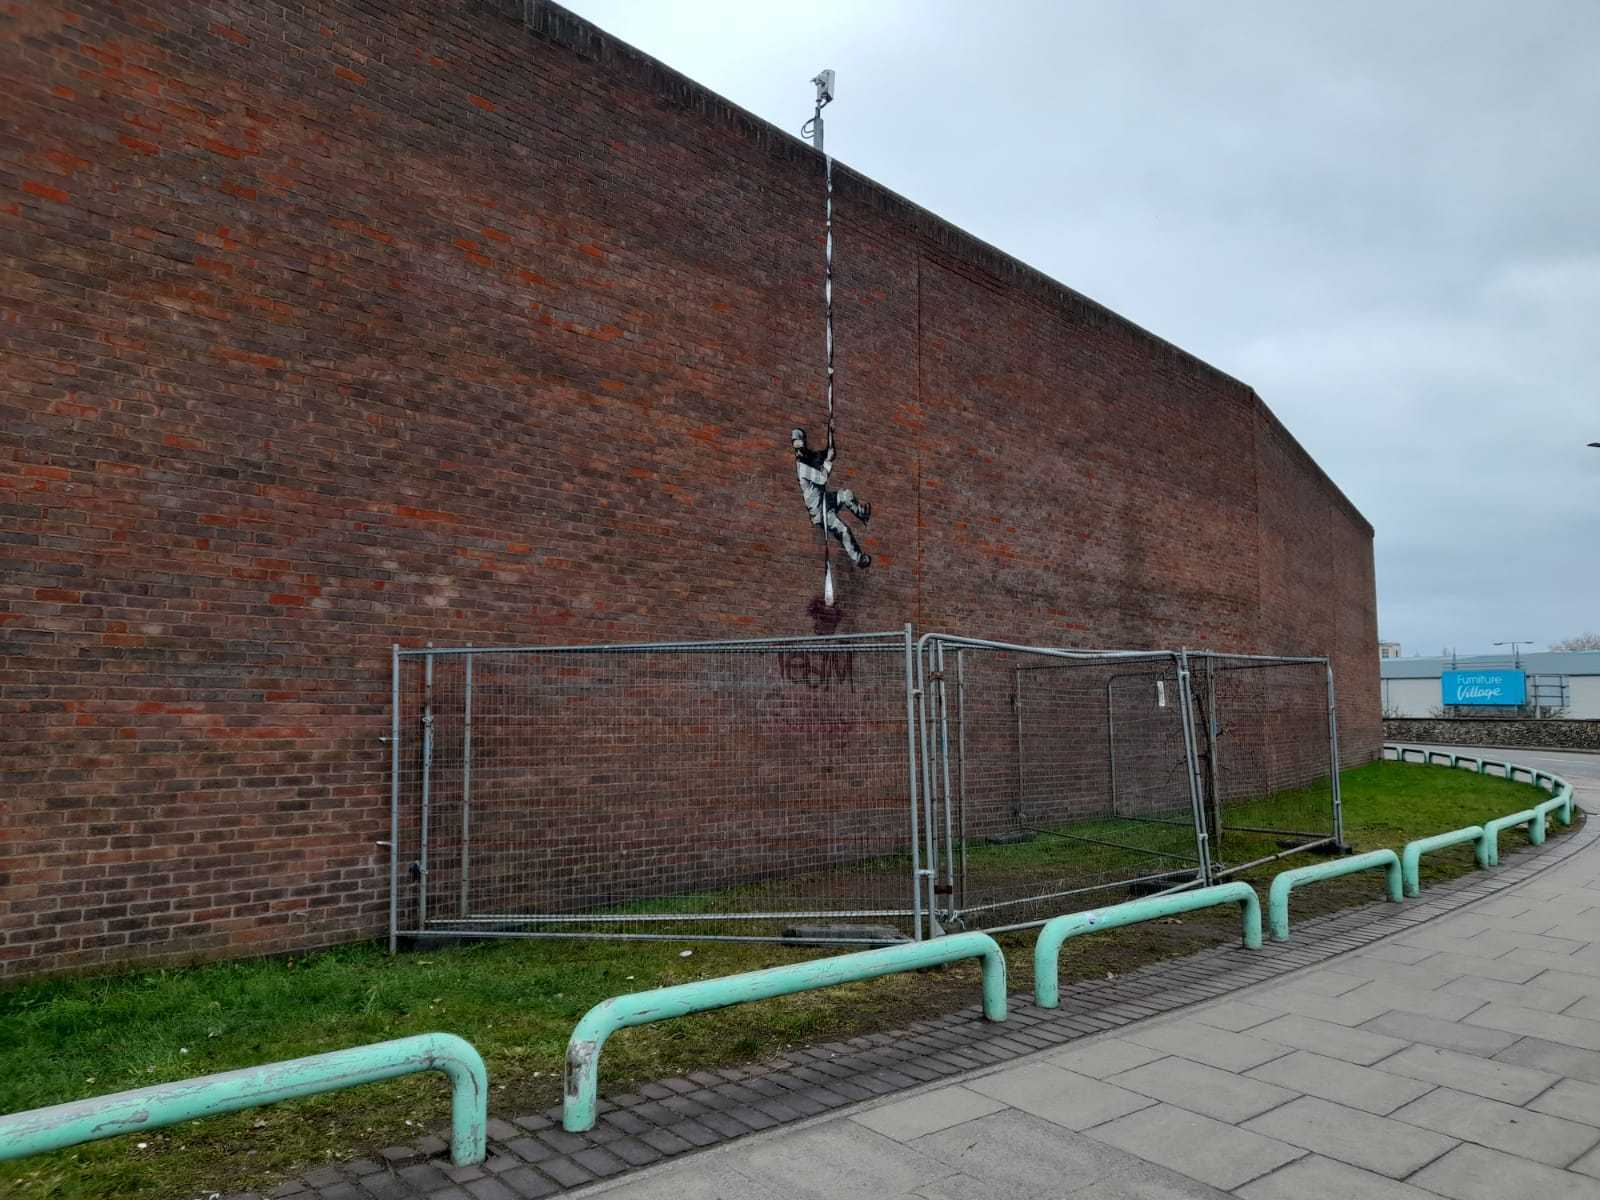 The Fenced Banksy Piece 2